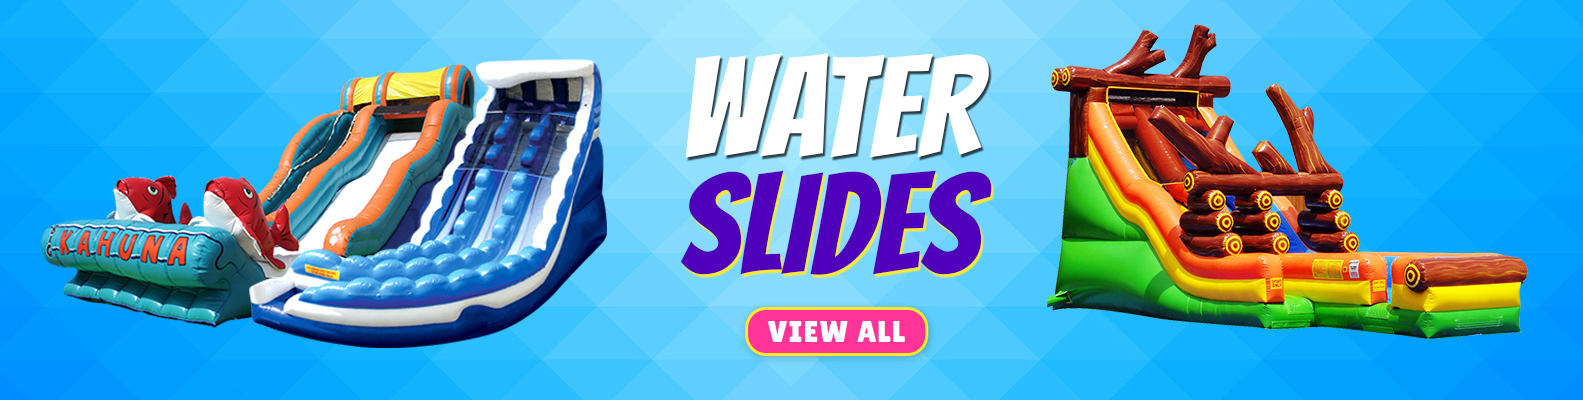 inflatable water slide rentals in Chandler